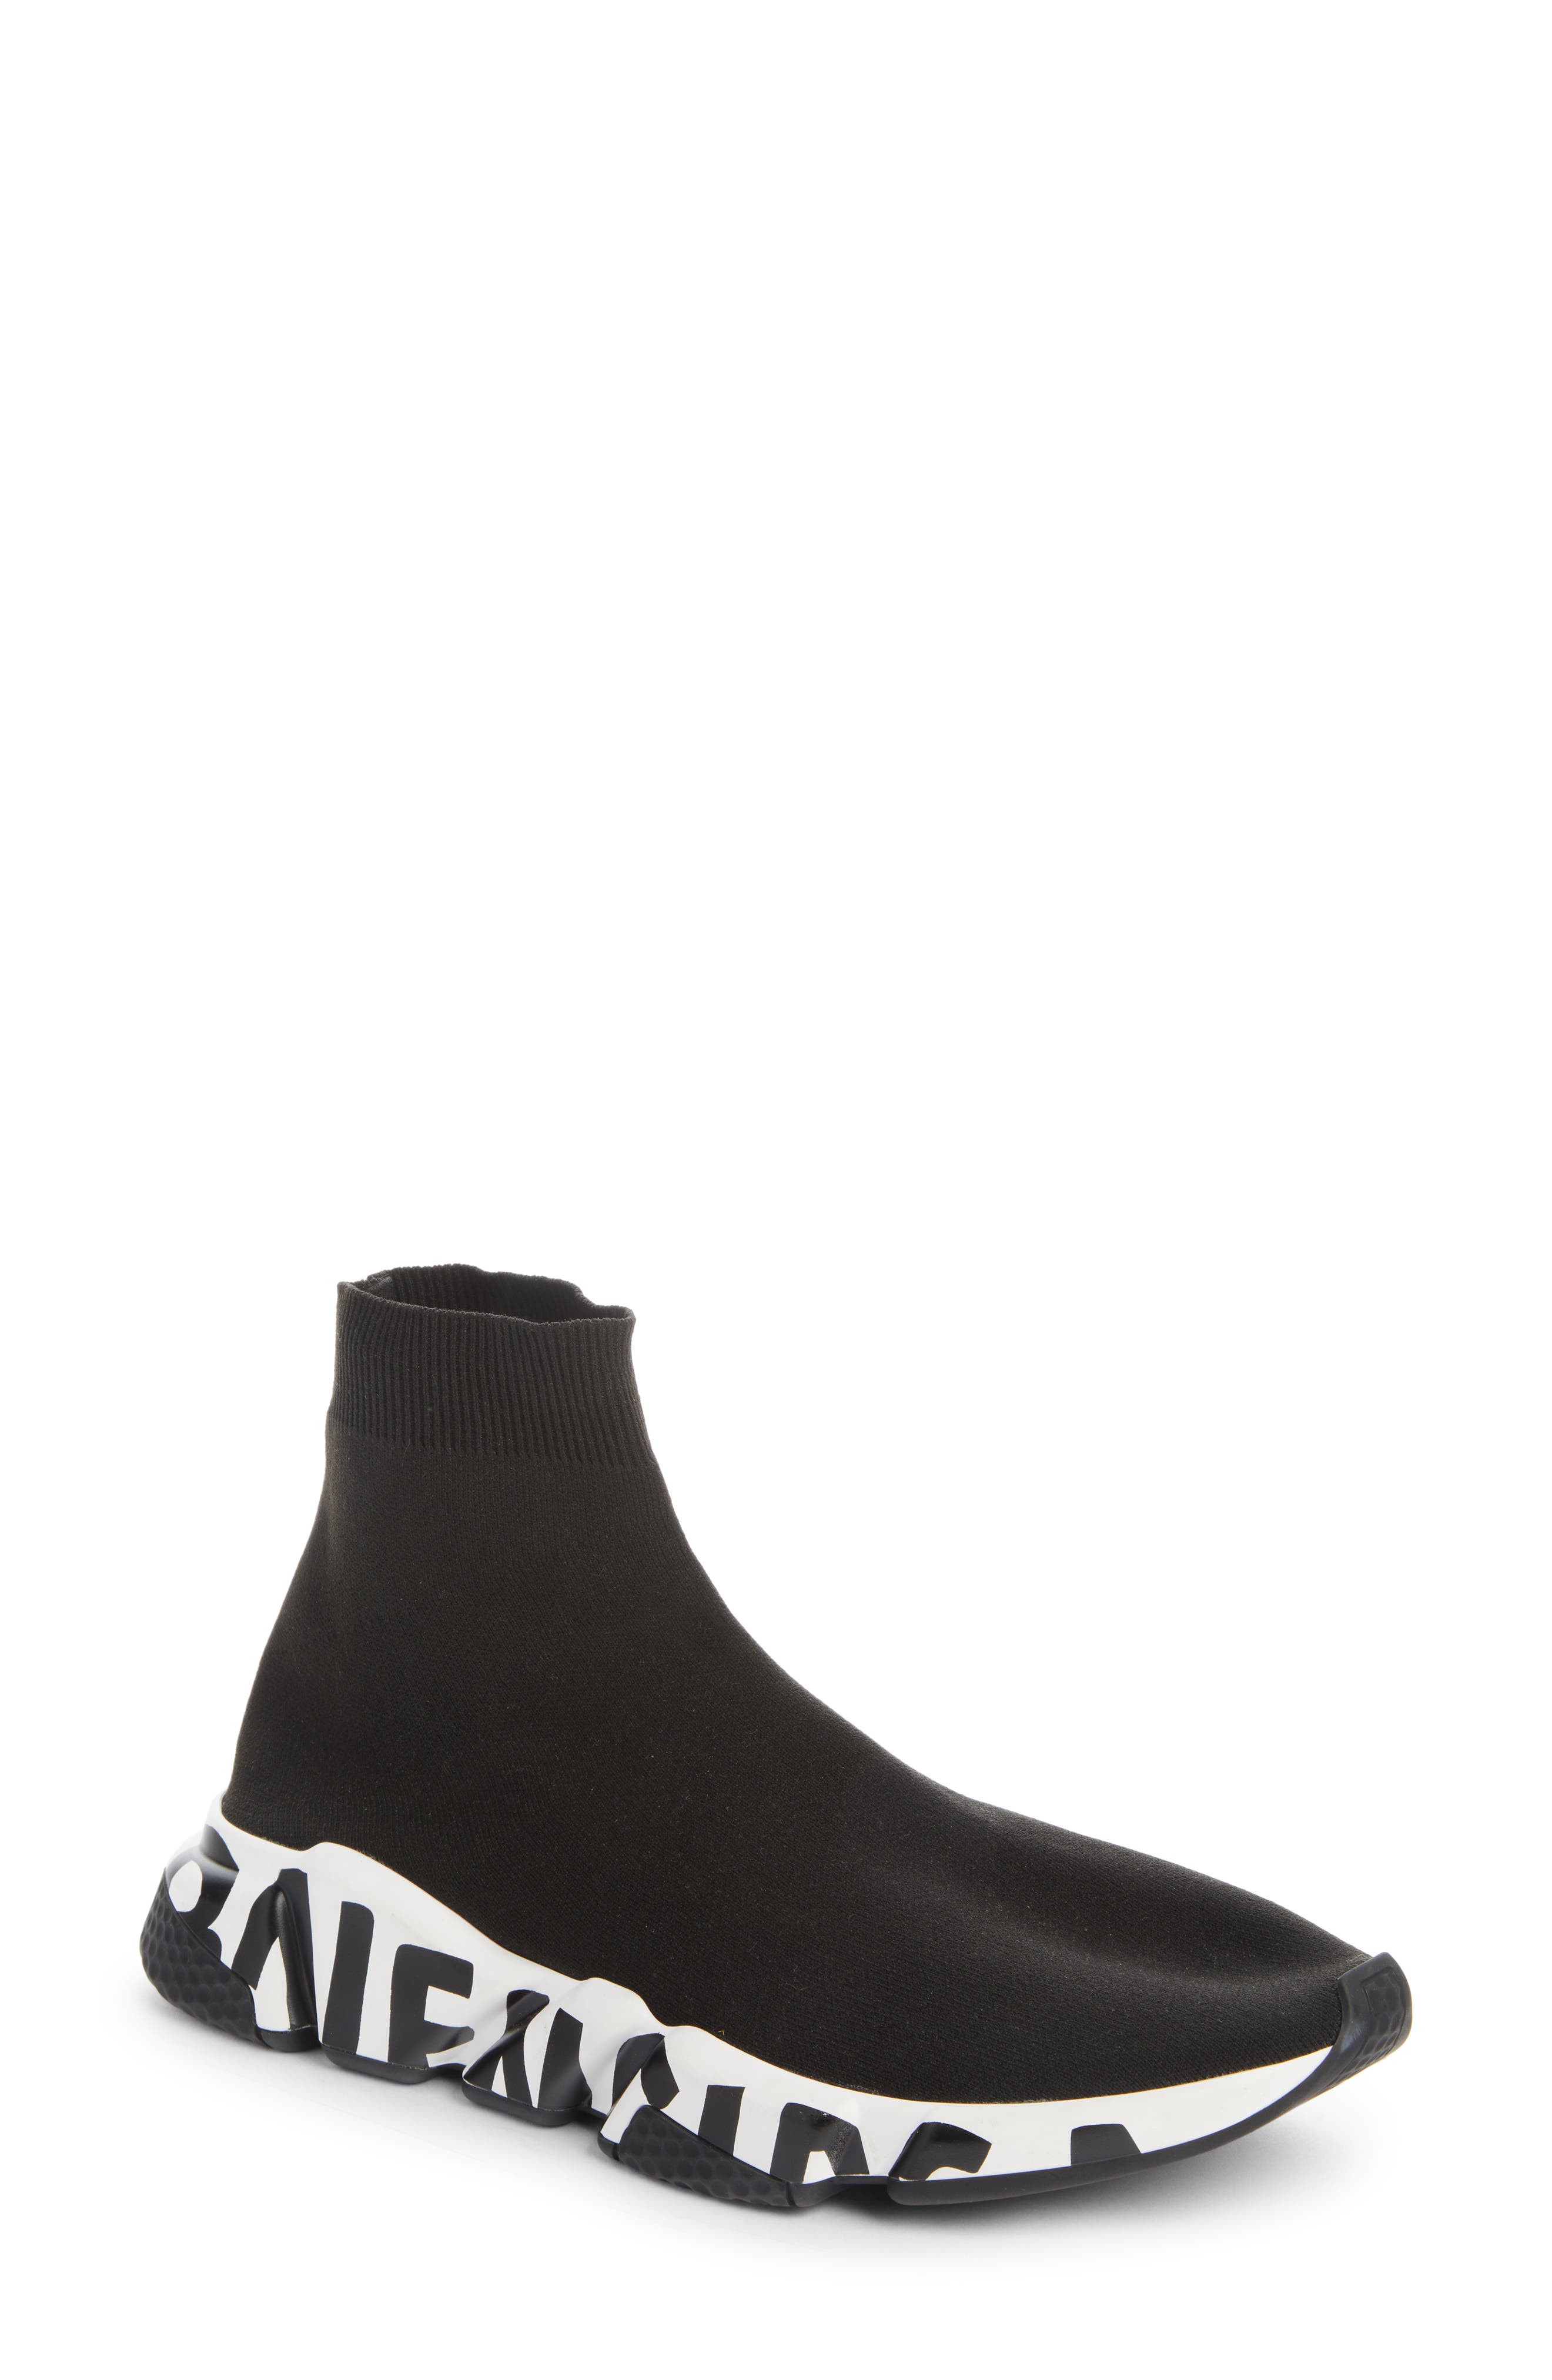 Balenciaga Speed LT Graffiti Sock Red Black White Logo High Top Sneaker 46  13